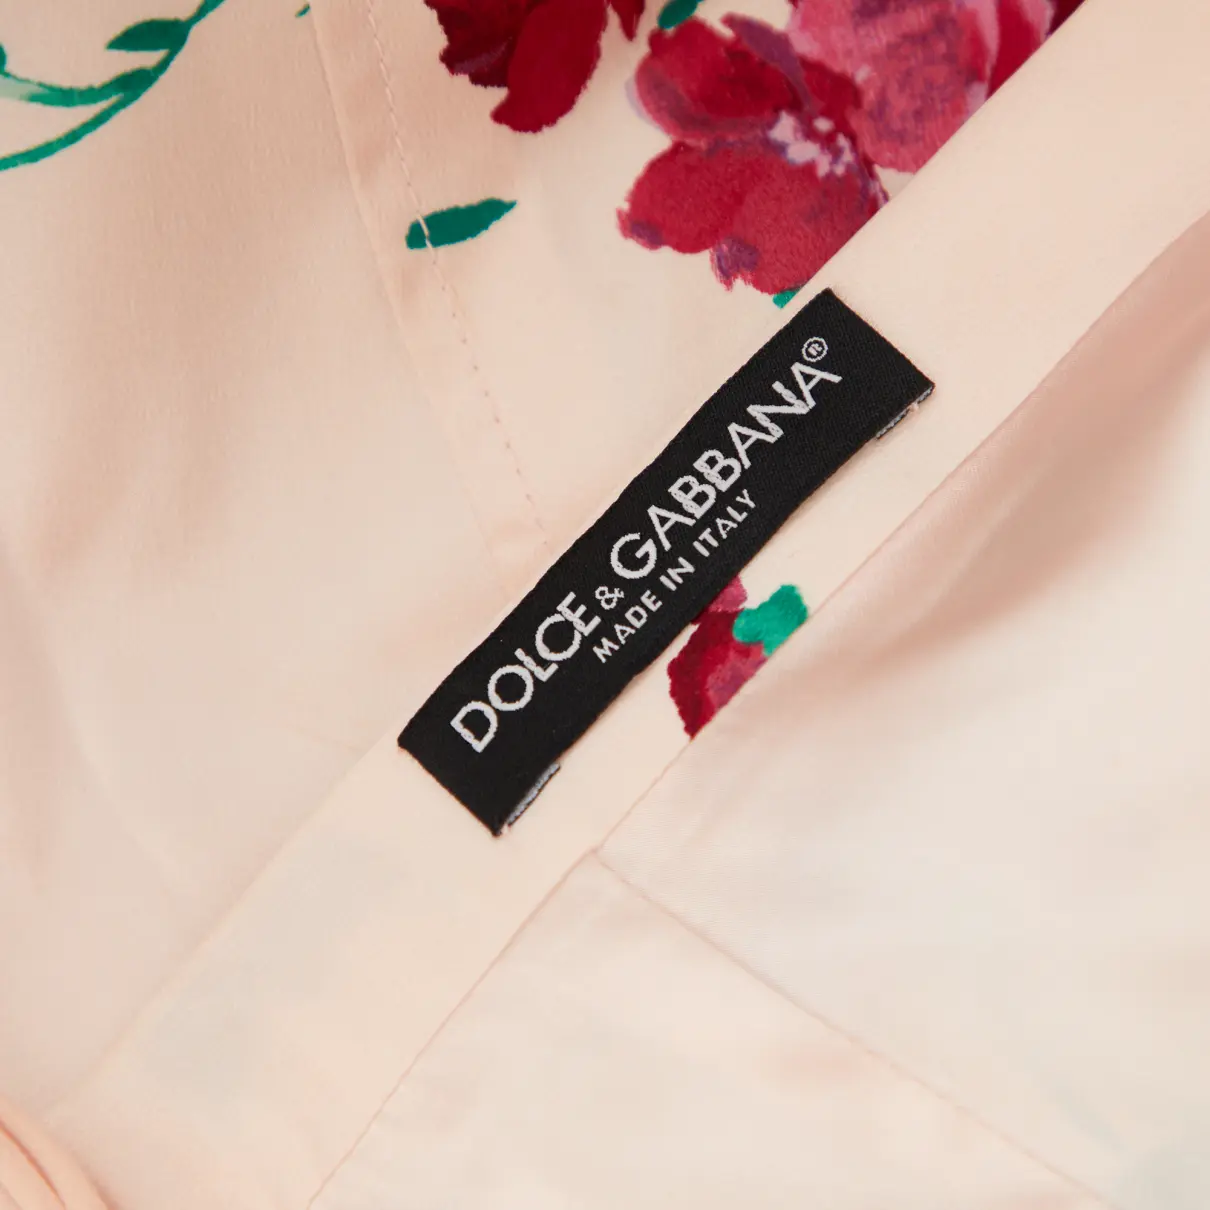 Luxury Dolce & Gabbana Skirts Women